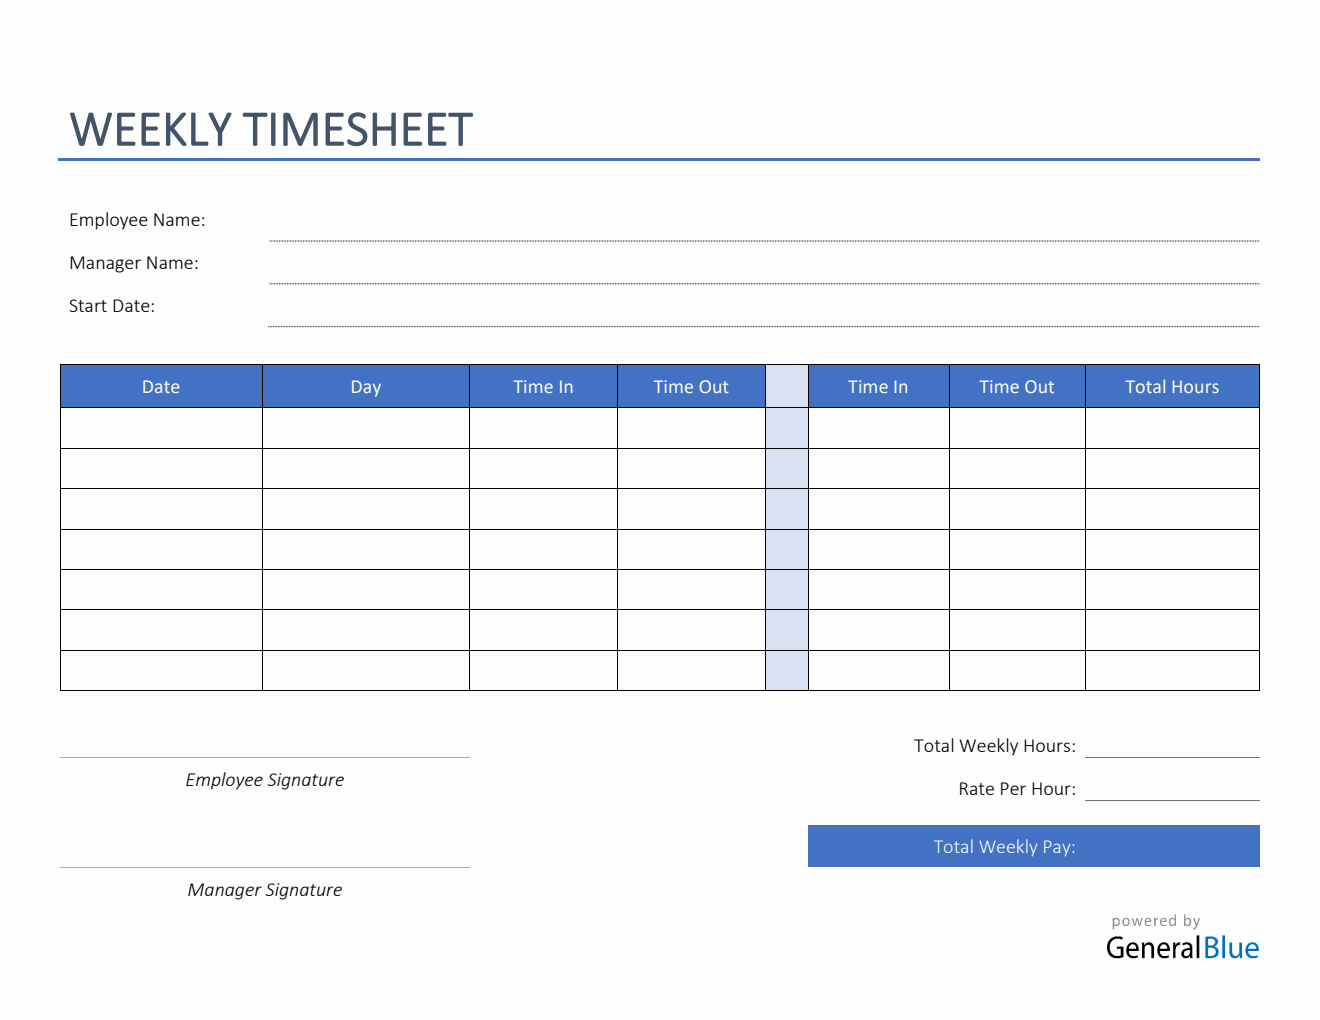 weekly-timesheet-in-pdf